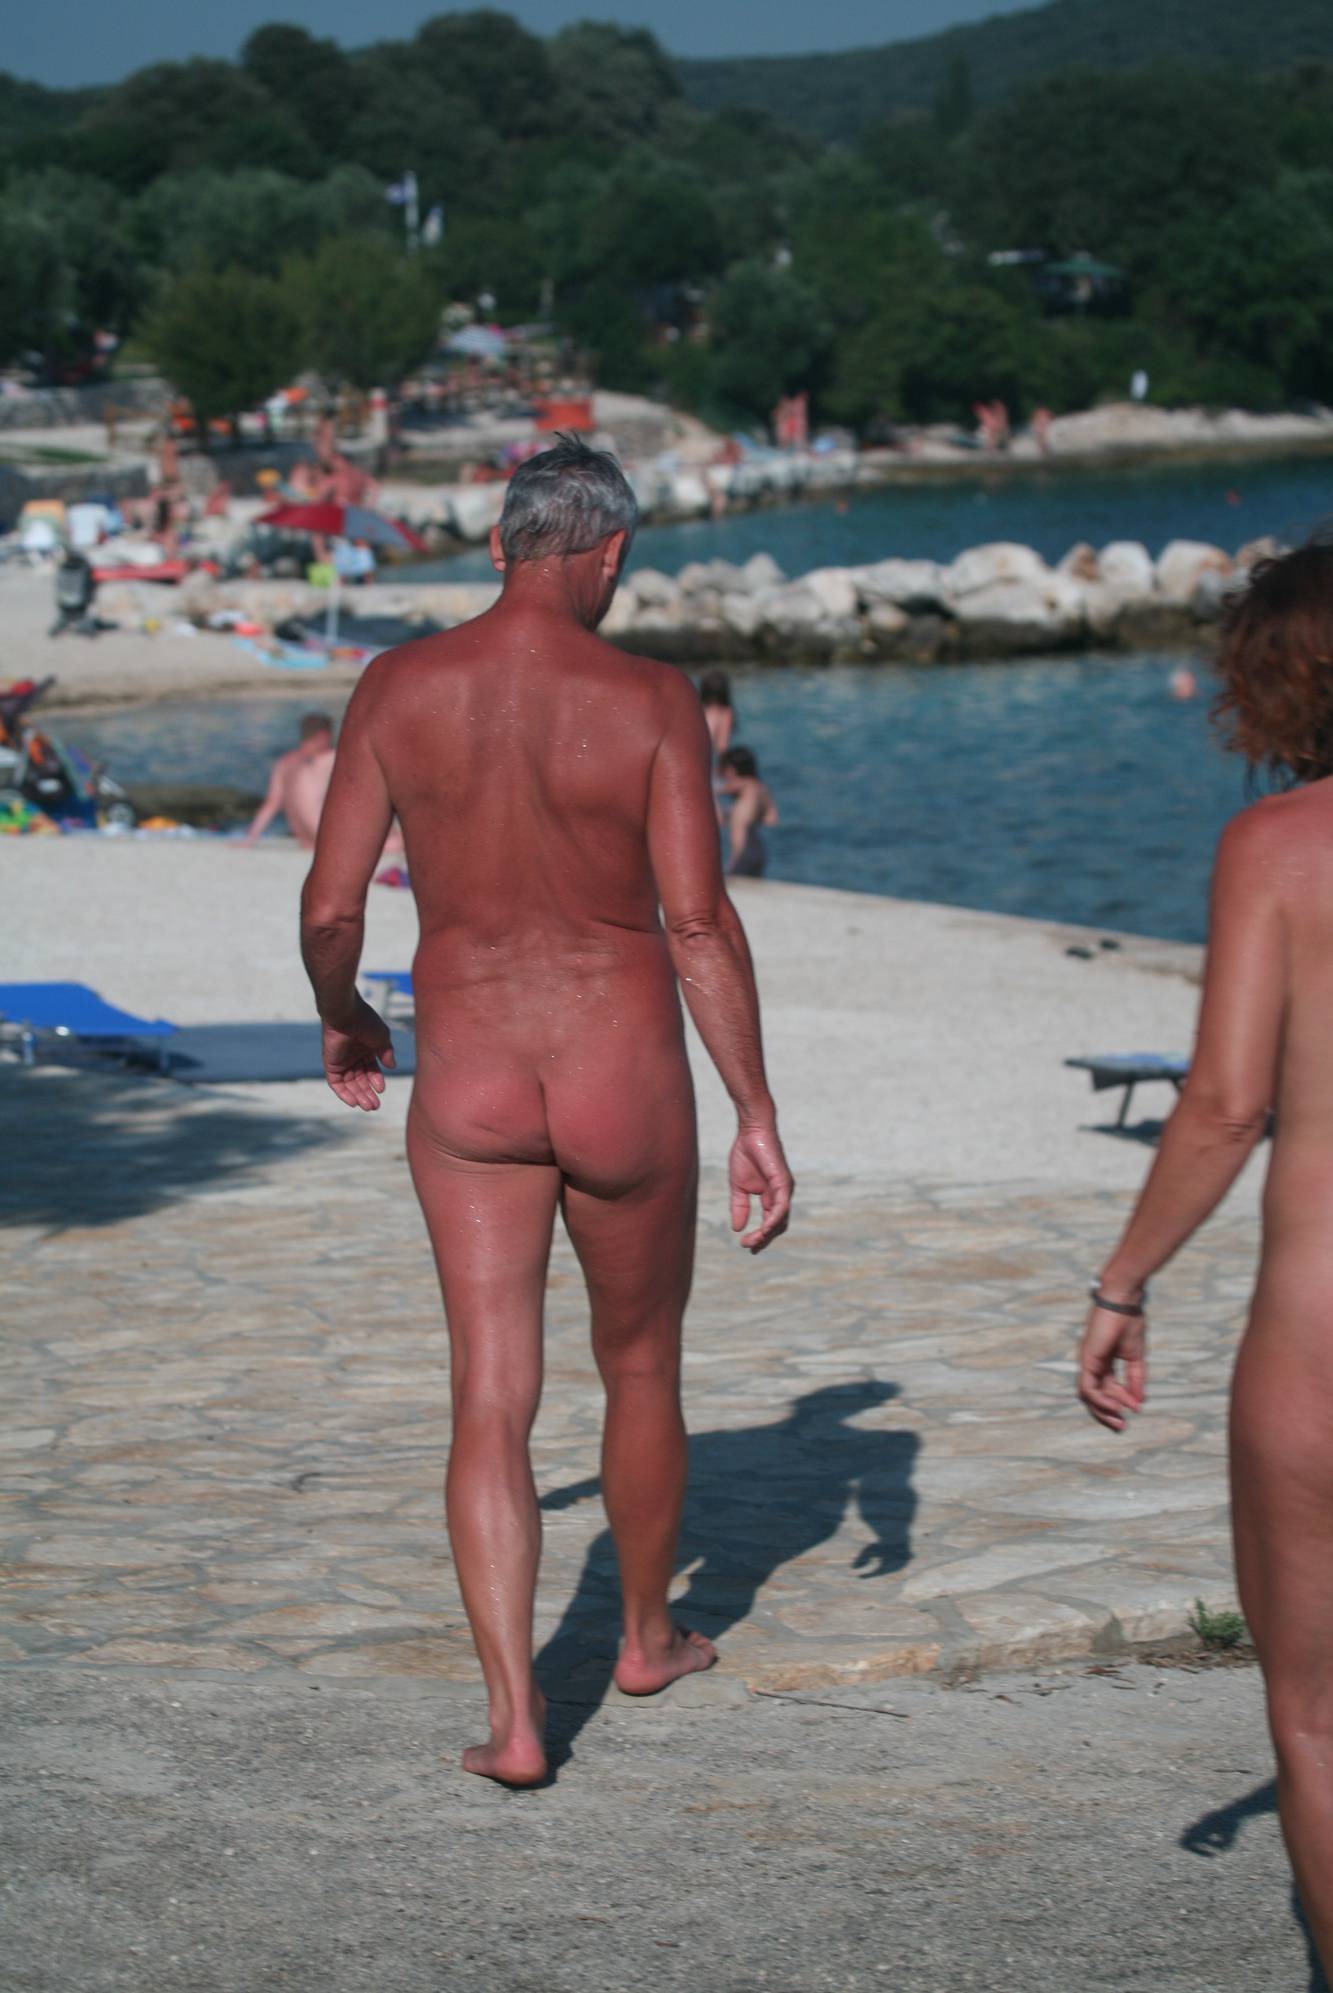 Nudist Pics Nudist Resort Shore Walk - 1